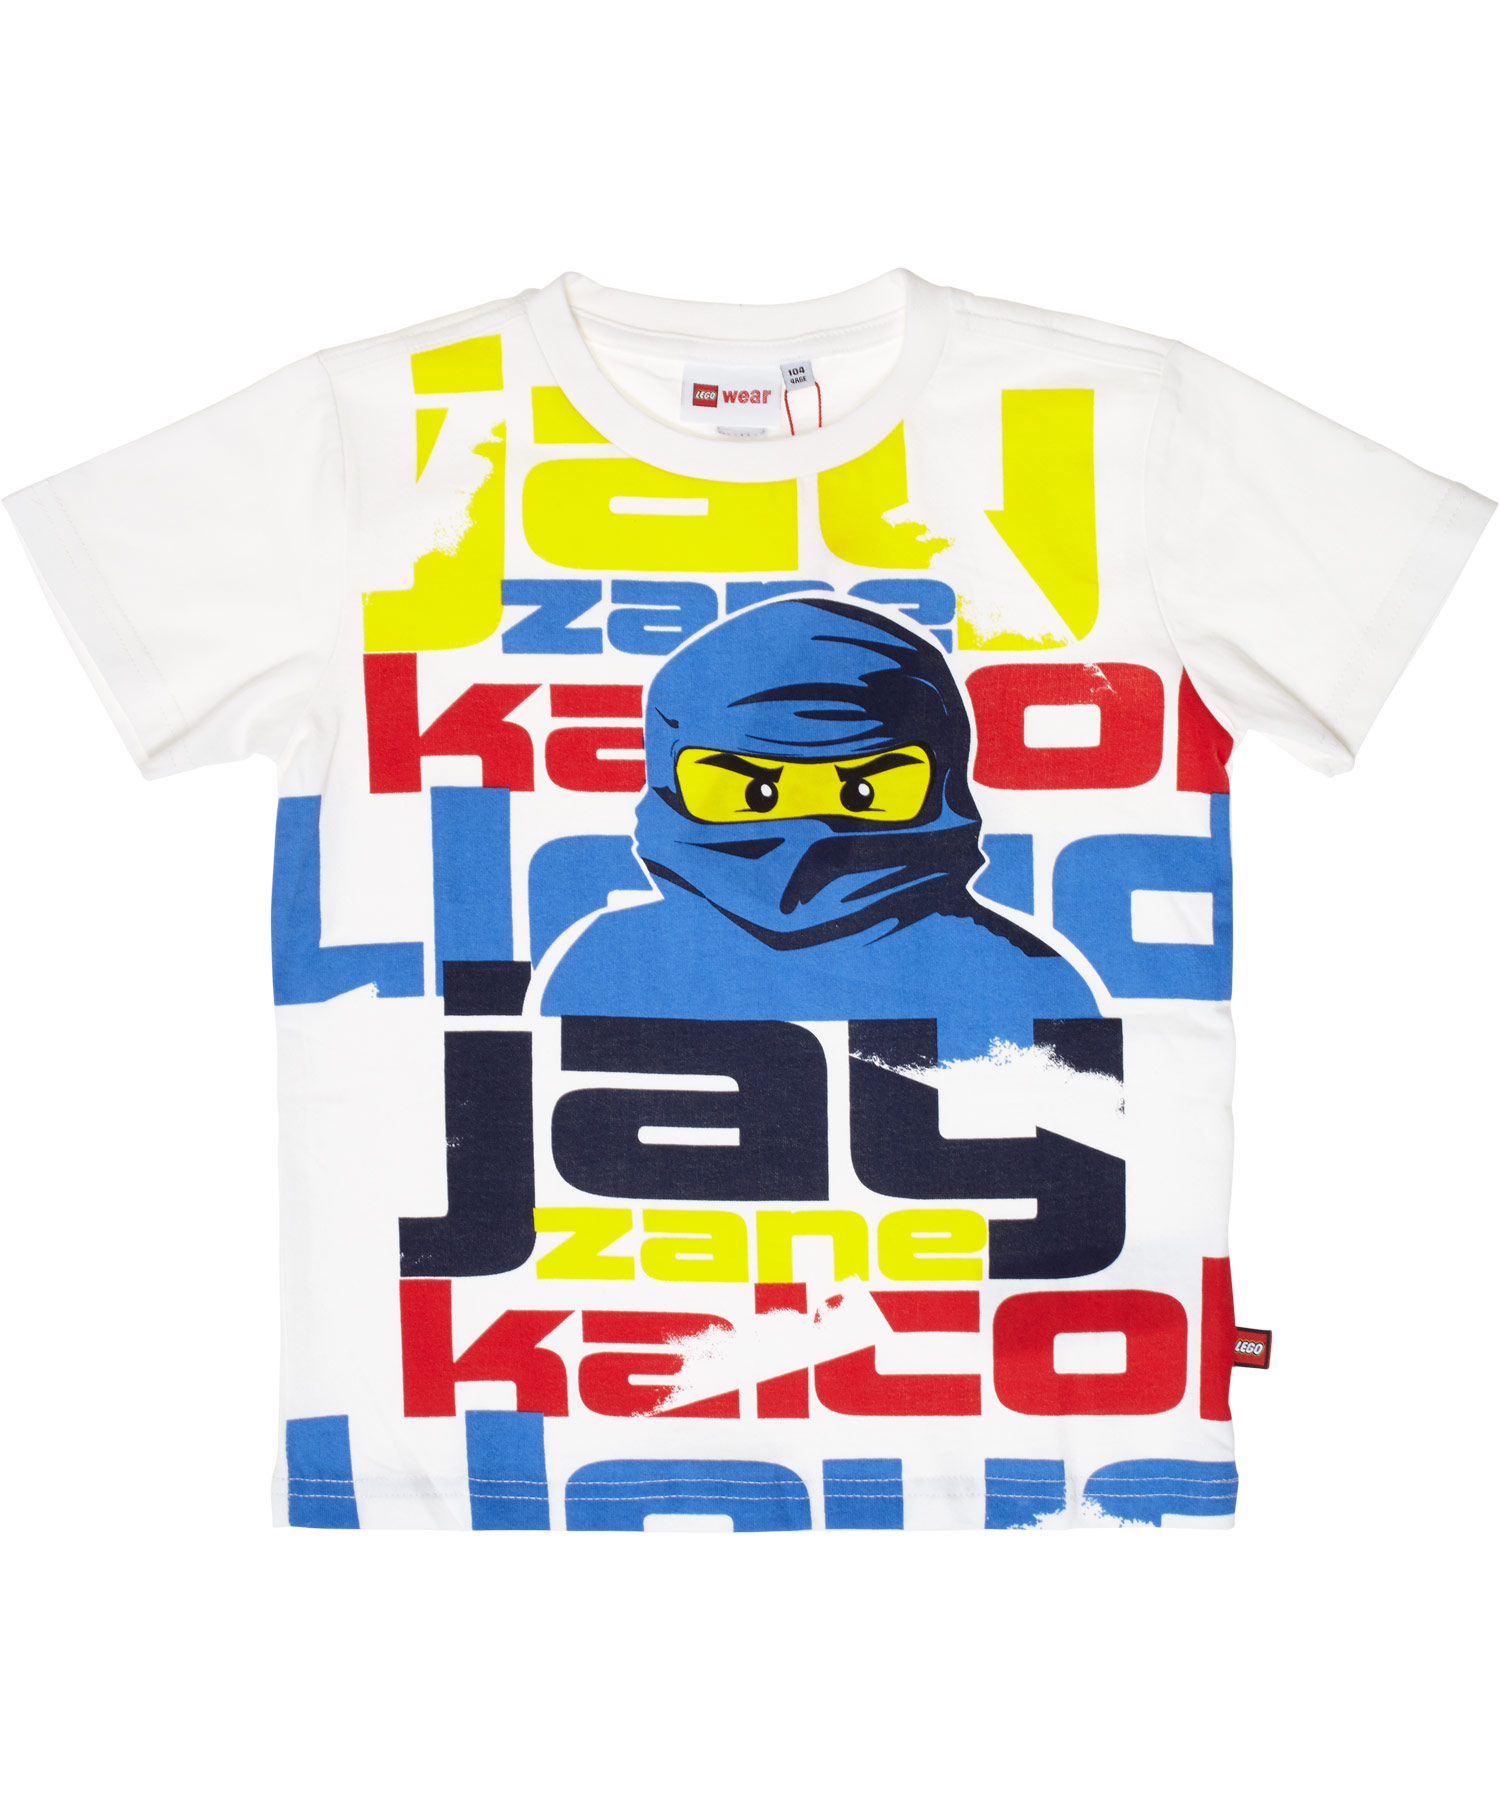 New! LEGO superb blue with white Ninjago t-shirt the Jay, ninja